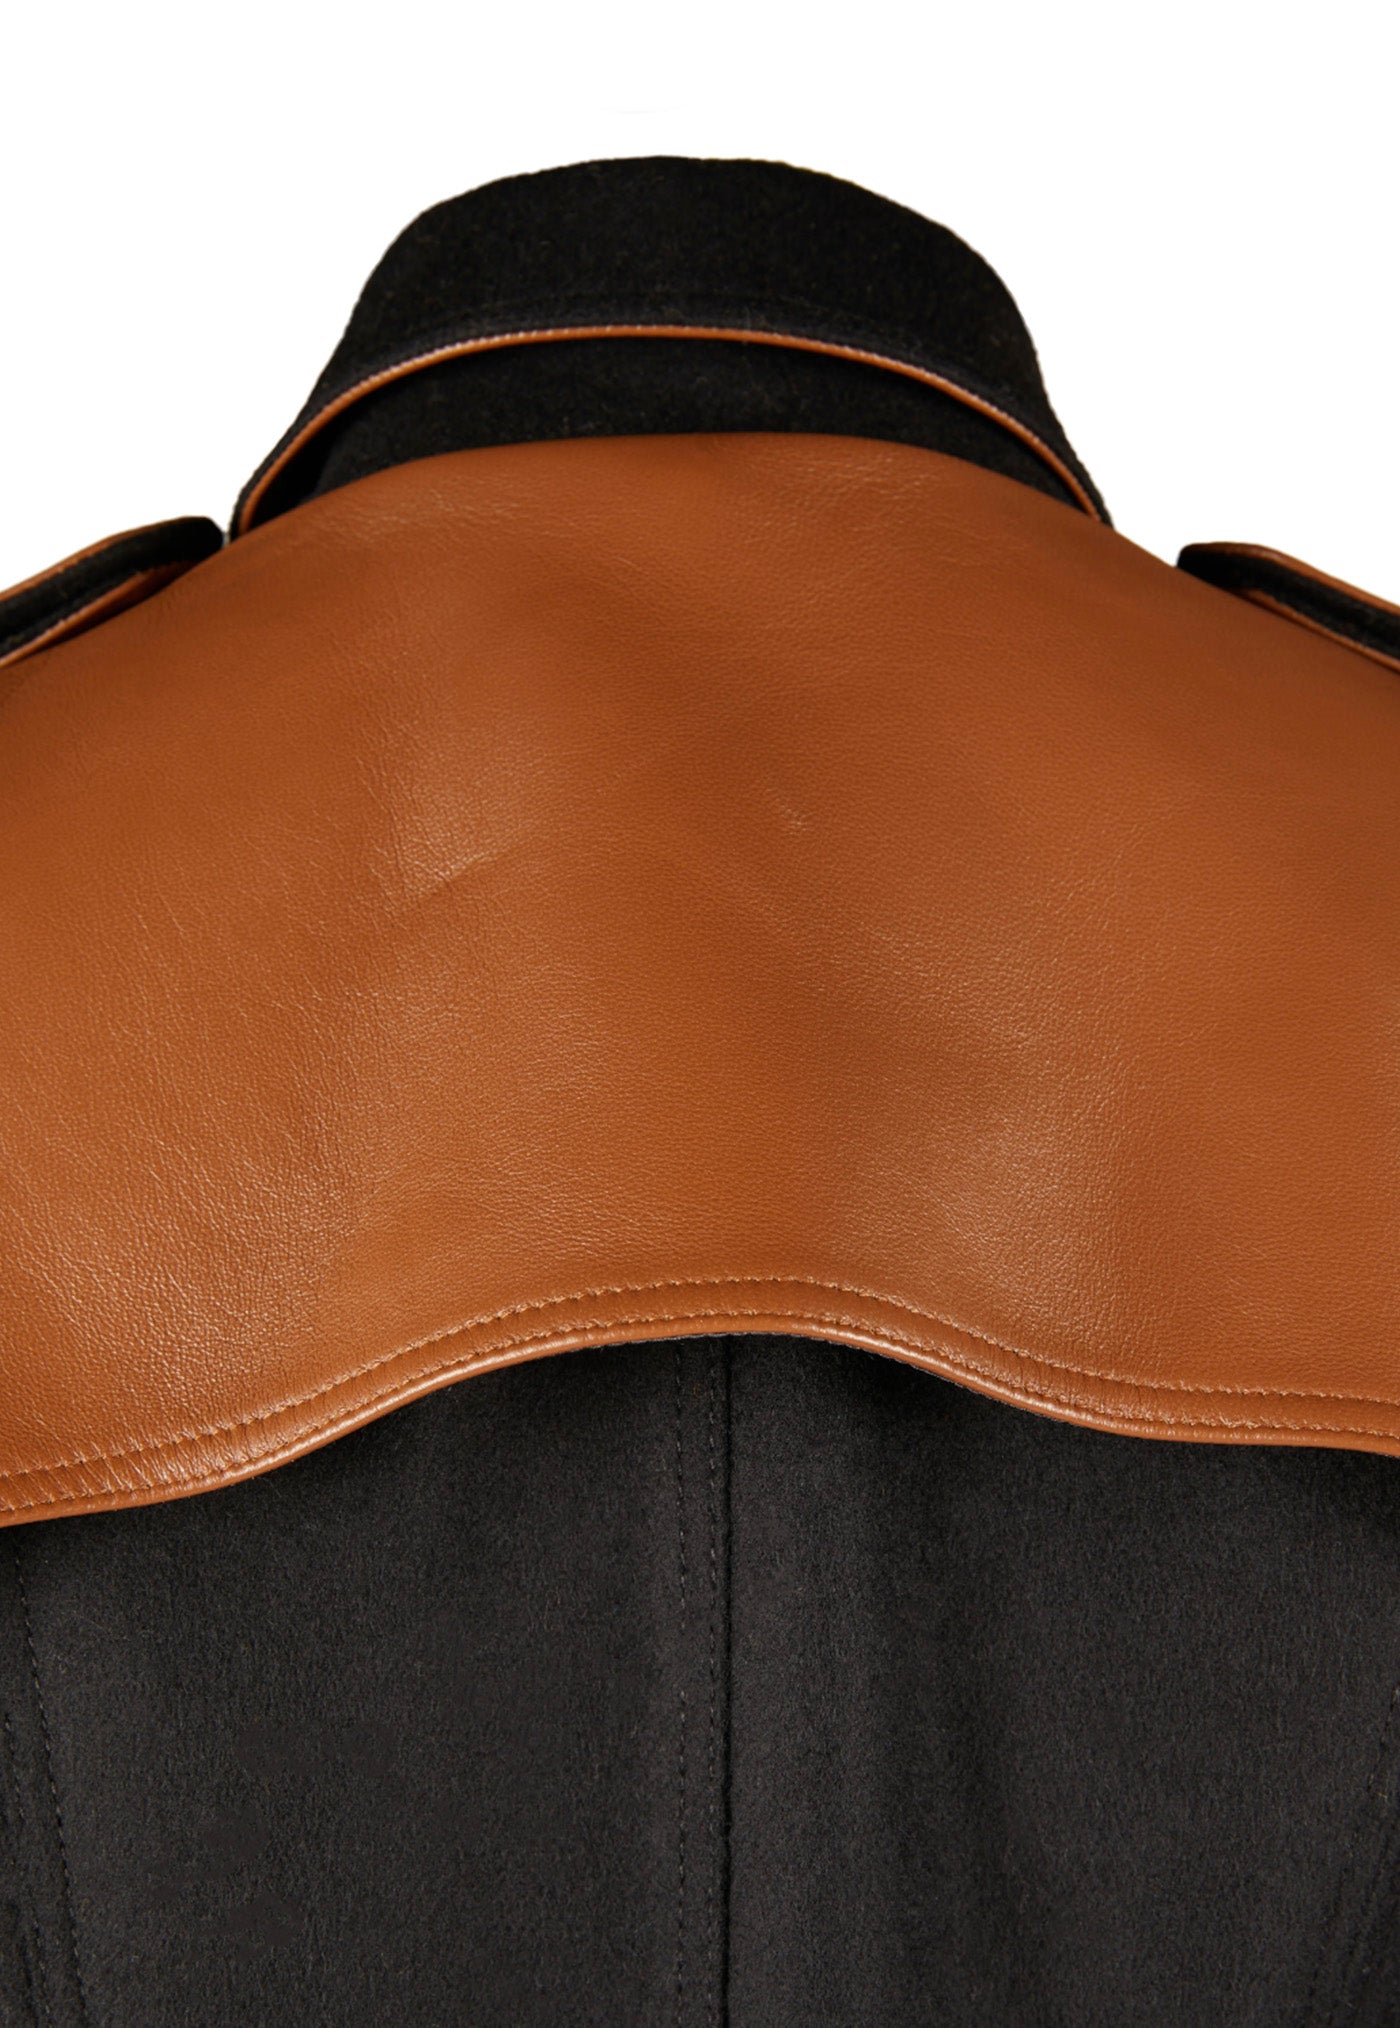 Marlborough Trench Coat - Black Tan sold by Angel Divine